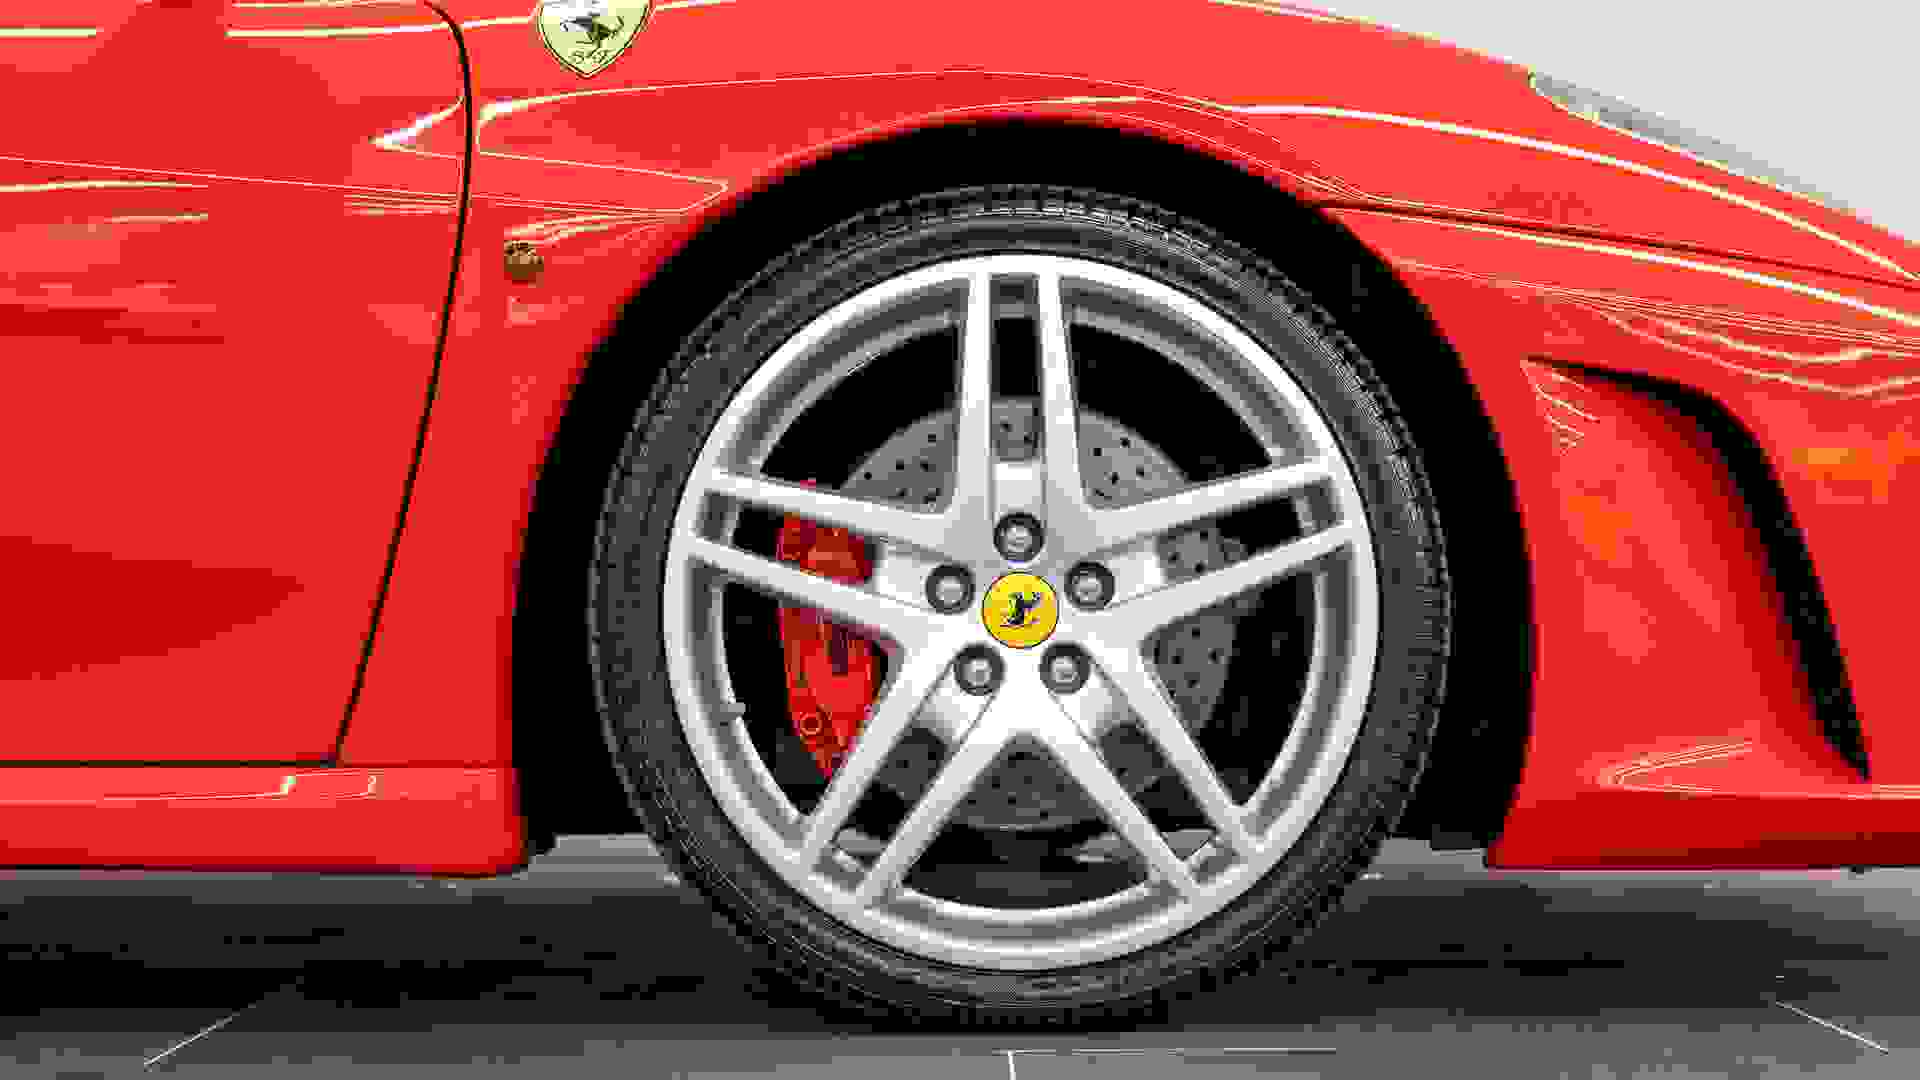 Ferrari F430 Photo ebfa6d0c-03a5-44ac-8398-8085c9ffde8a.jpg